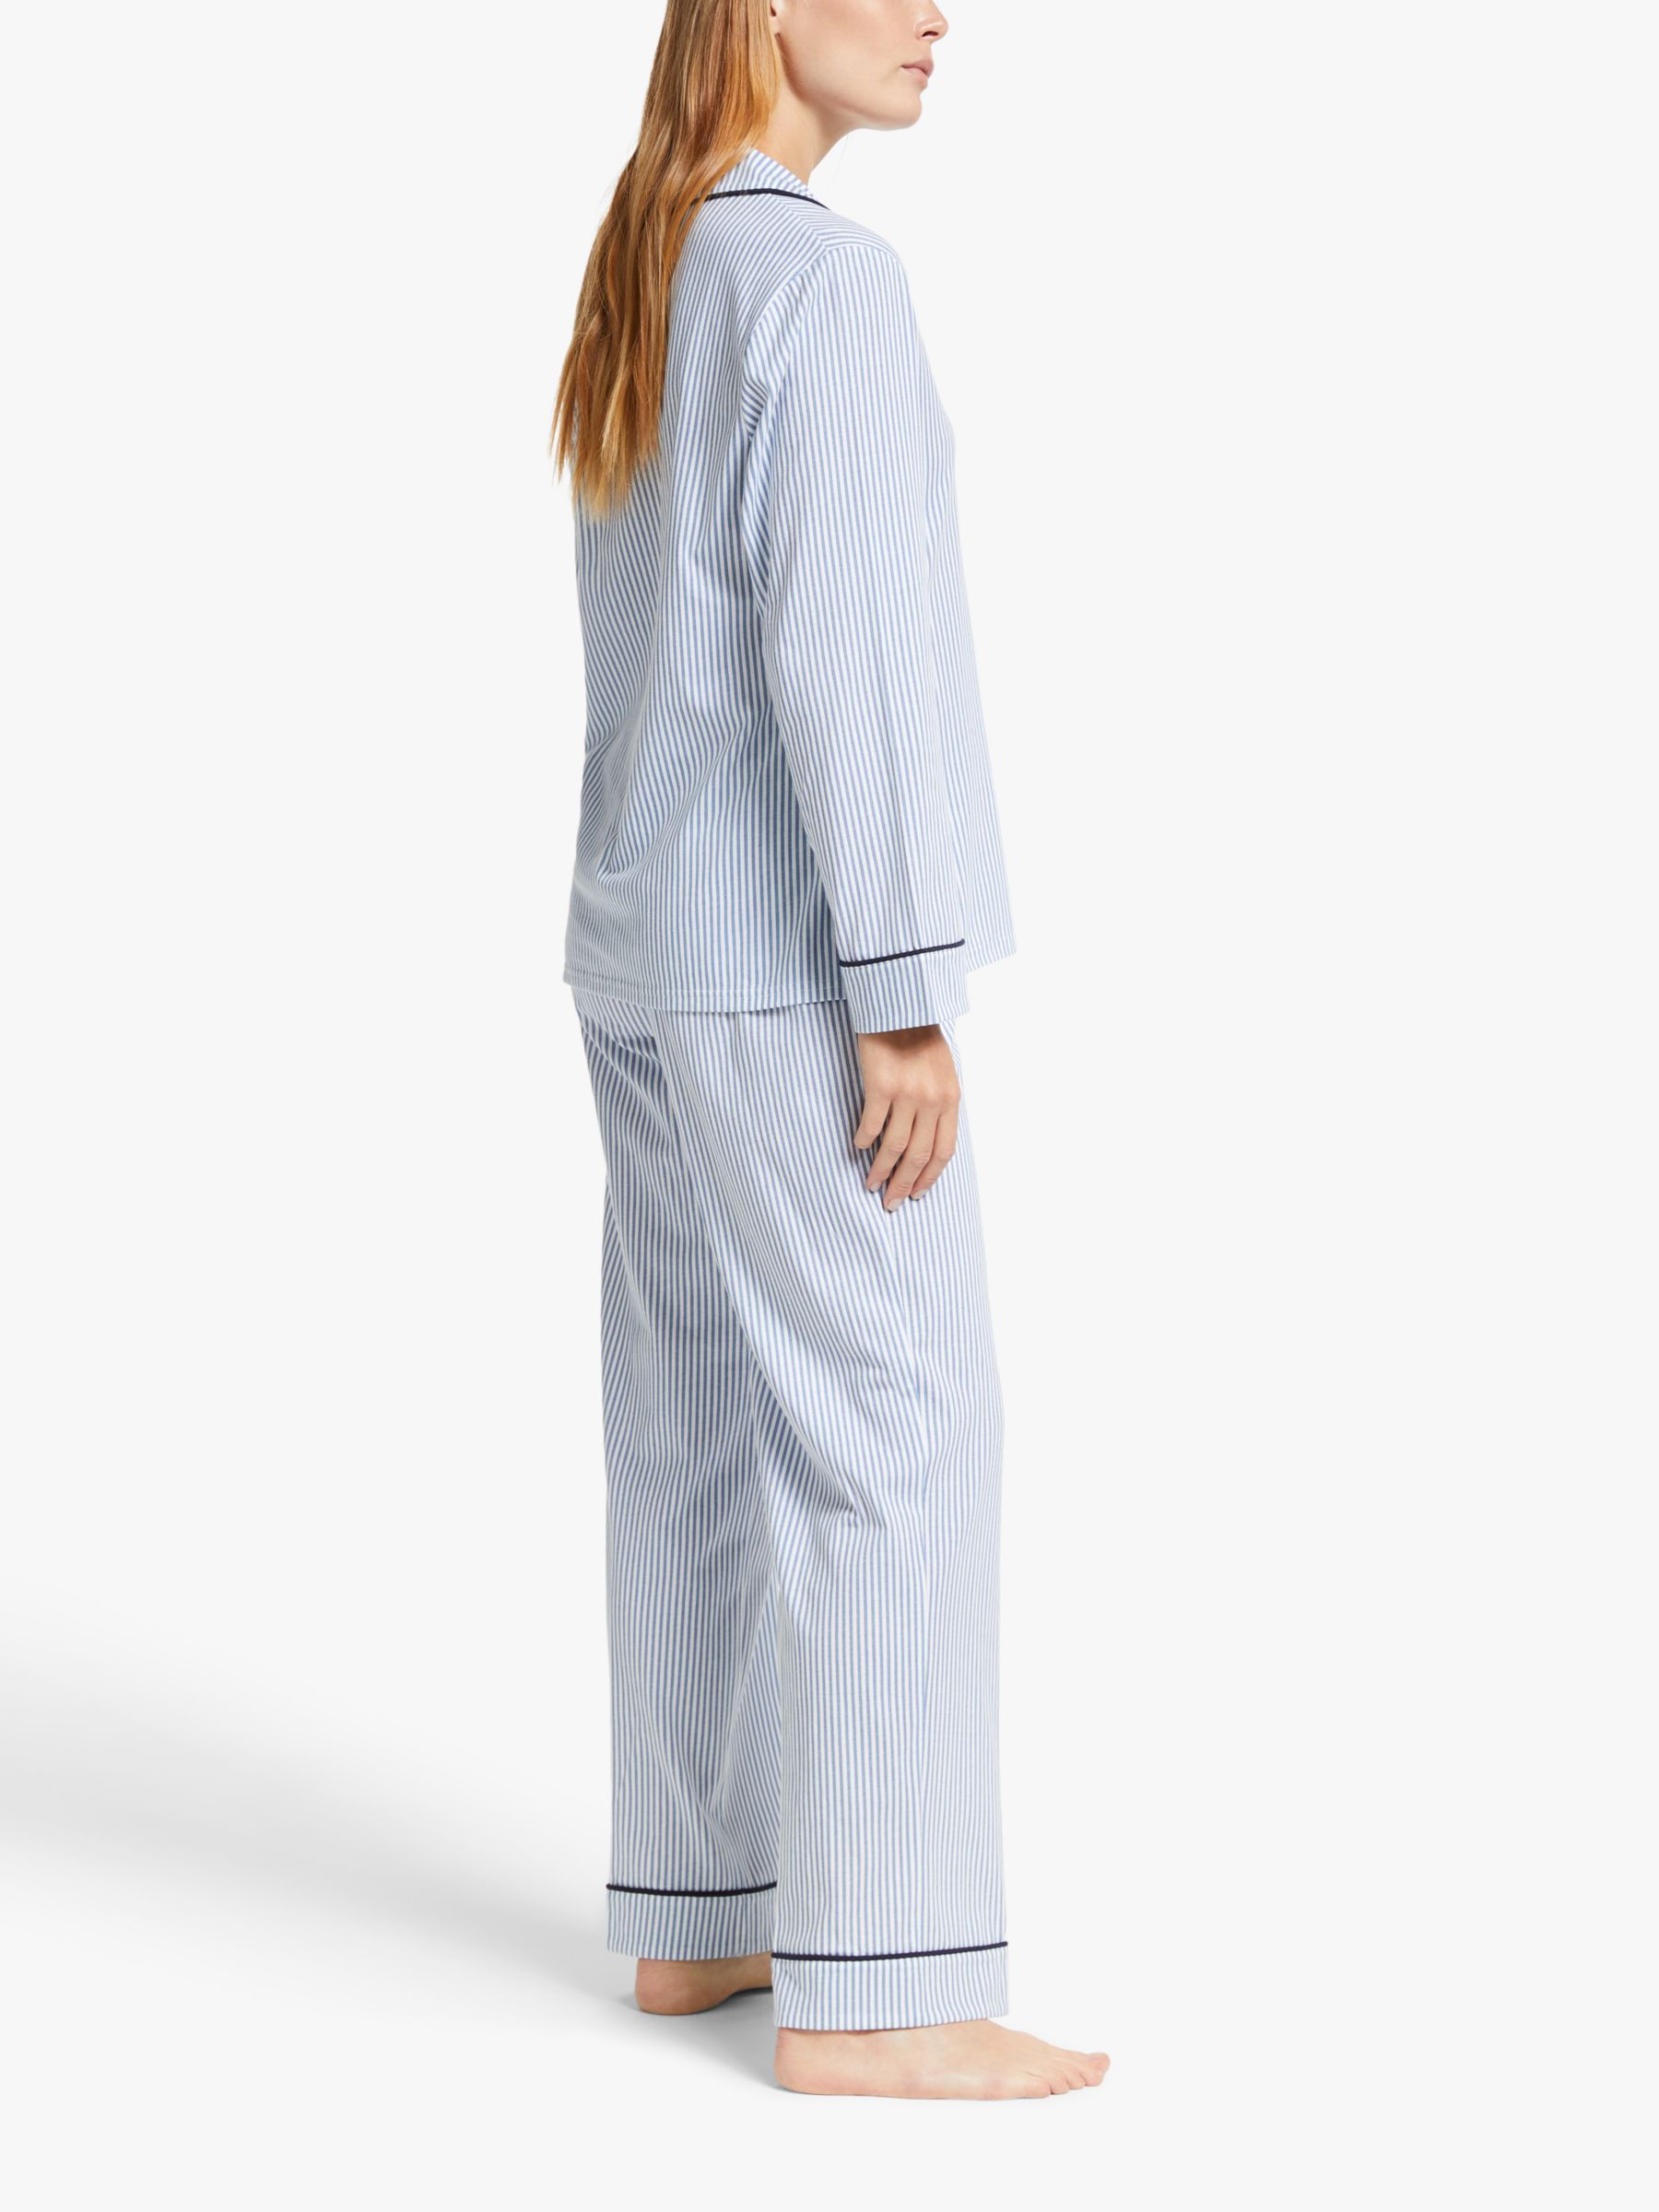 John Lewis Candi Stripe Jersey Pyjama Set, Blue, 8